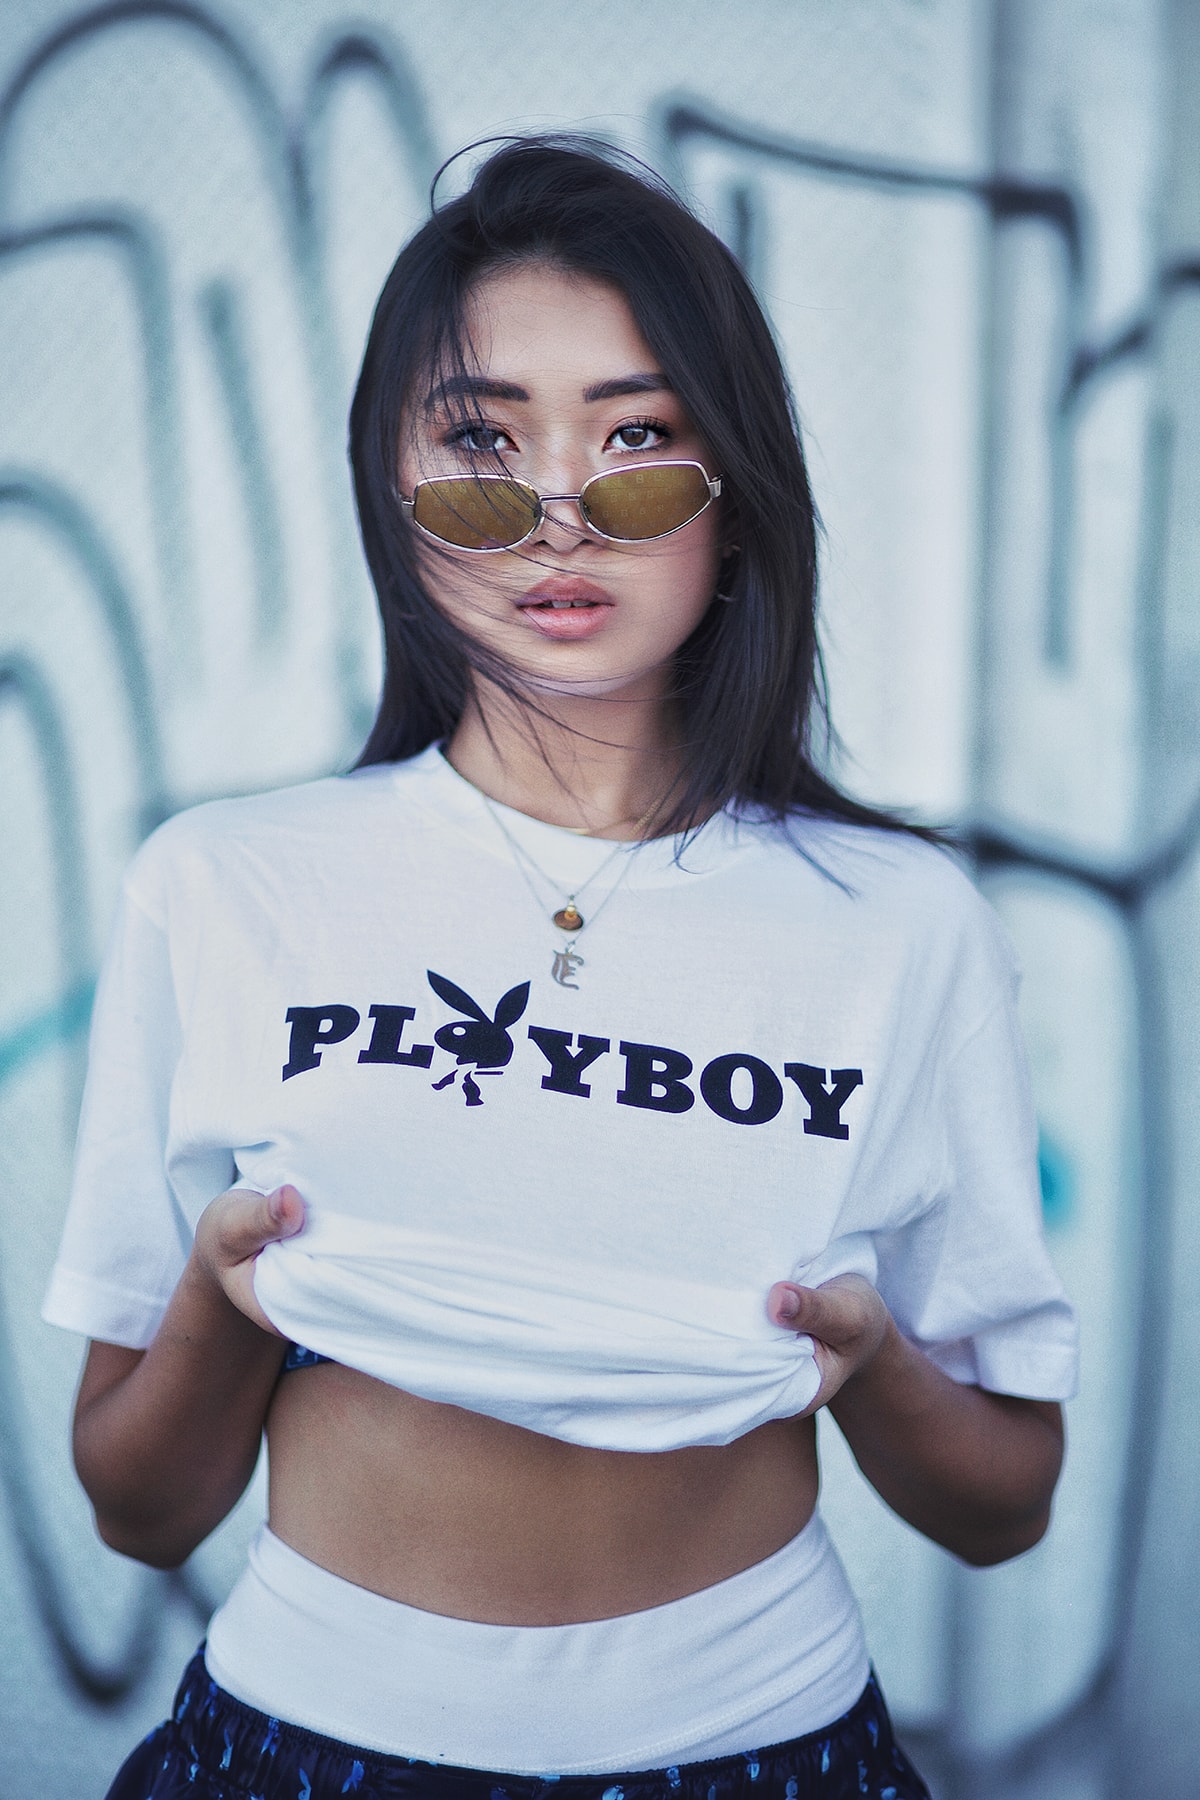 Playboy White Label Debut Collection Full Look Hugh Hefner Hoodies T shirt Pants Jie Zheng